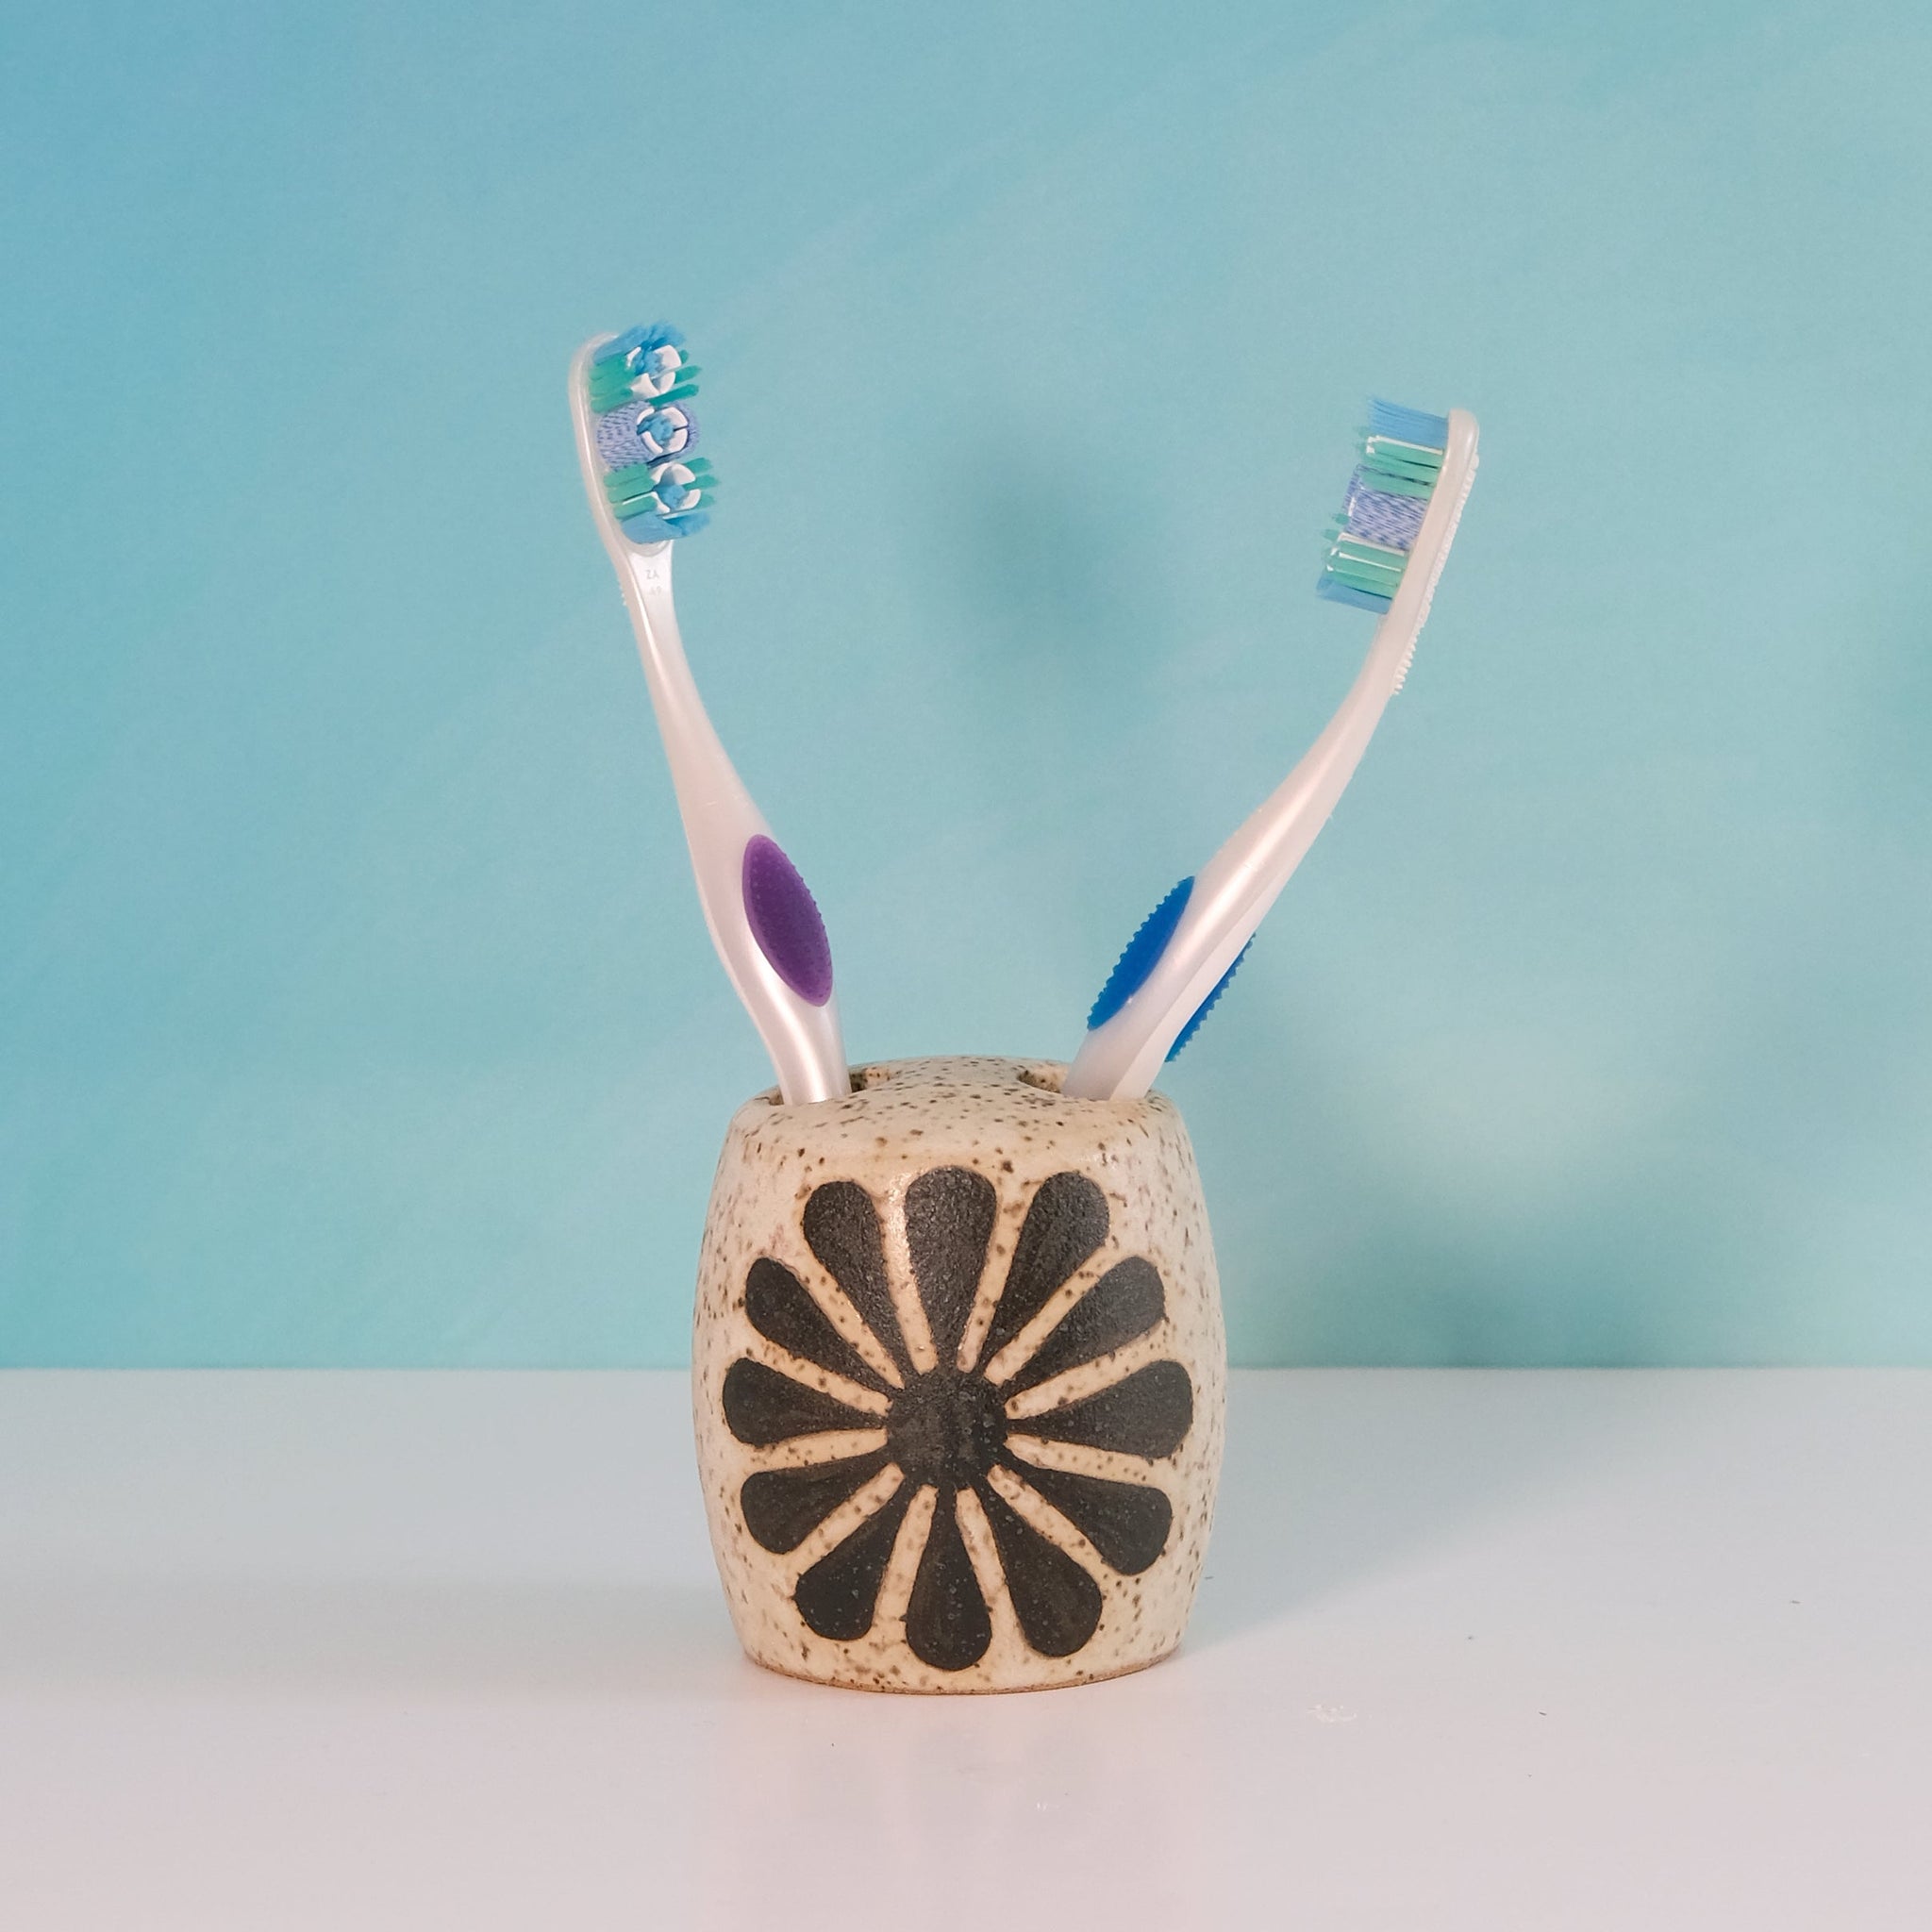 Made-to-Order Glazed Stoneware Toothbrush Holder Mod Flower Pattern